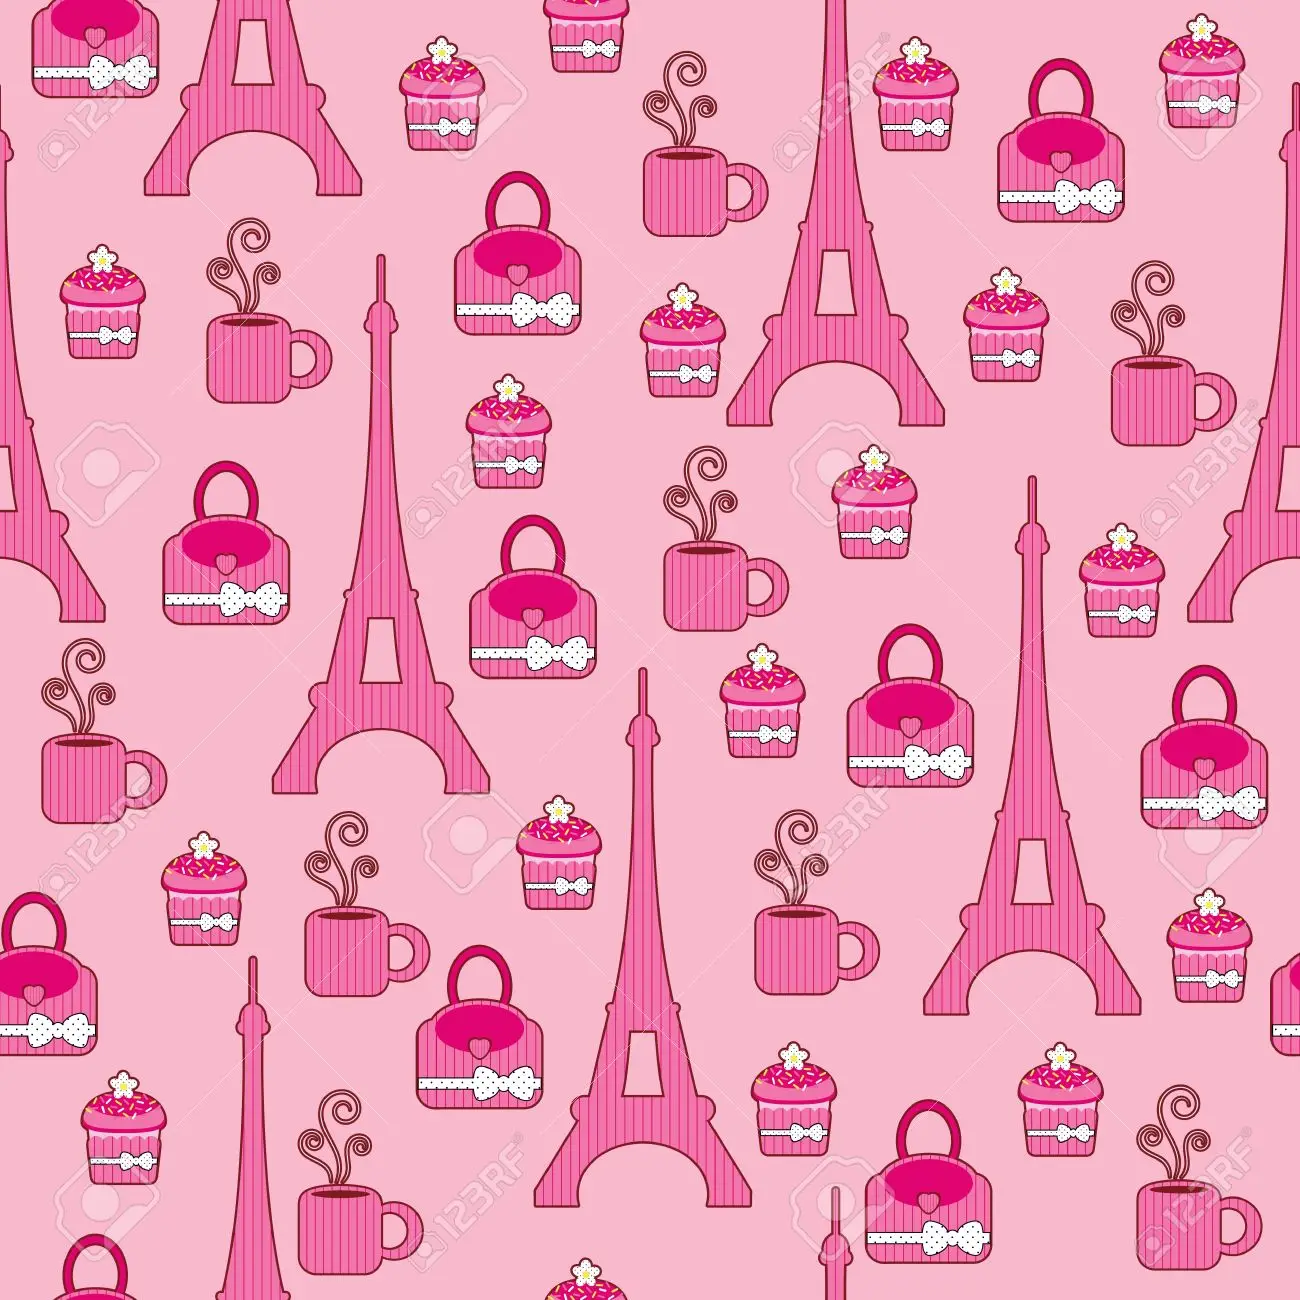 Pink bright wallpaper paris royalty free svg cliparts vectors and stock illustration image